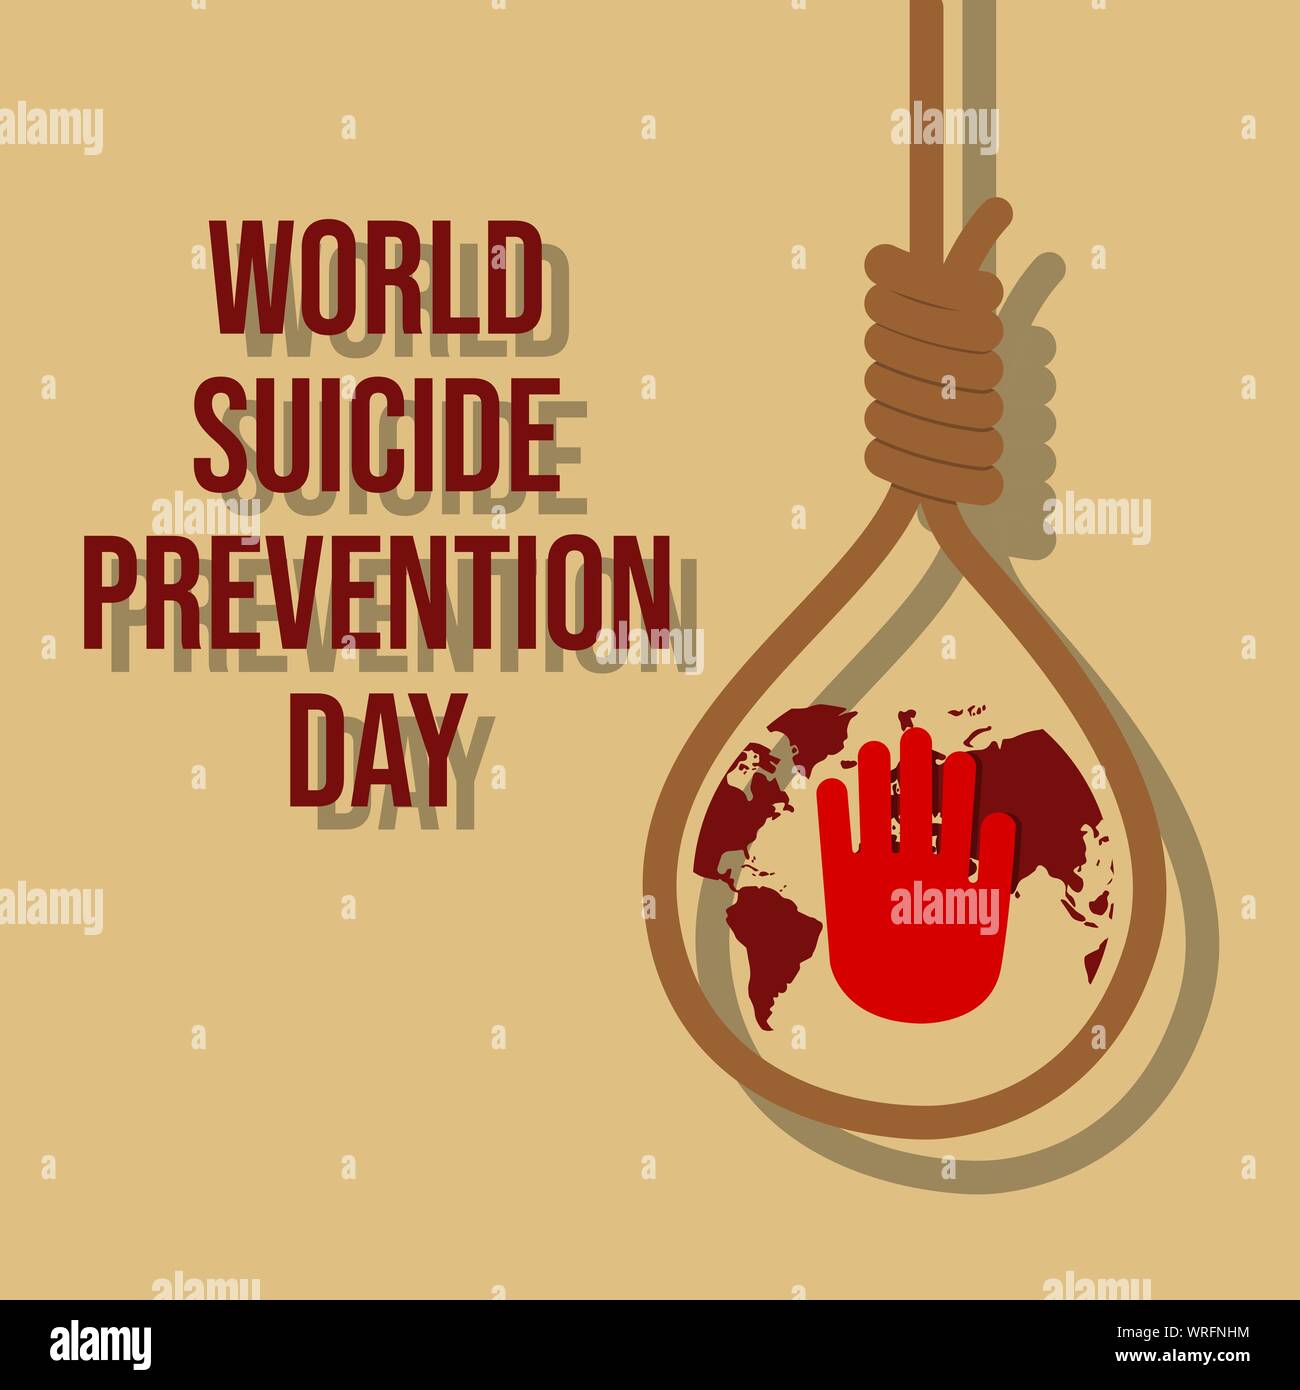 World suicide prevention day flat design illustration Vector image banner Stock Vector